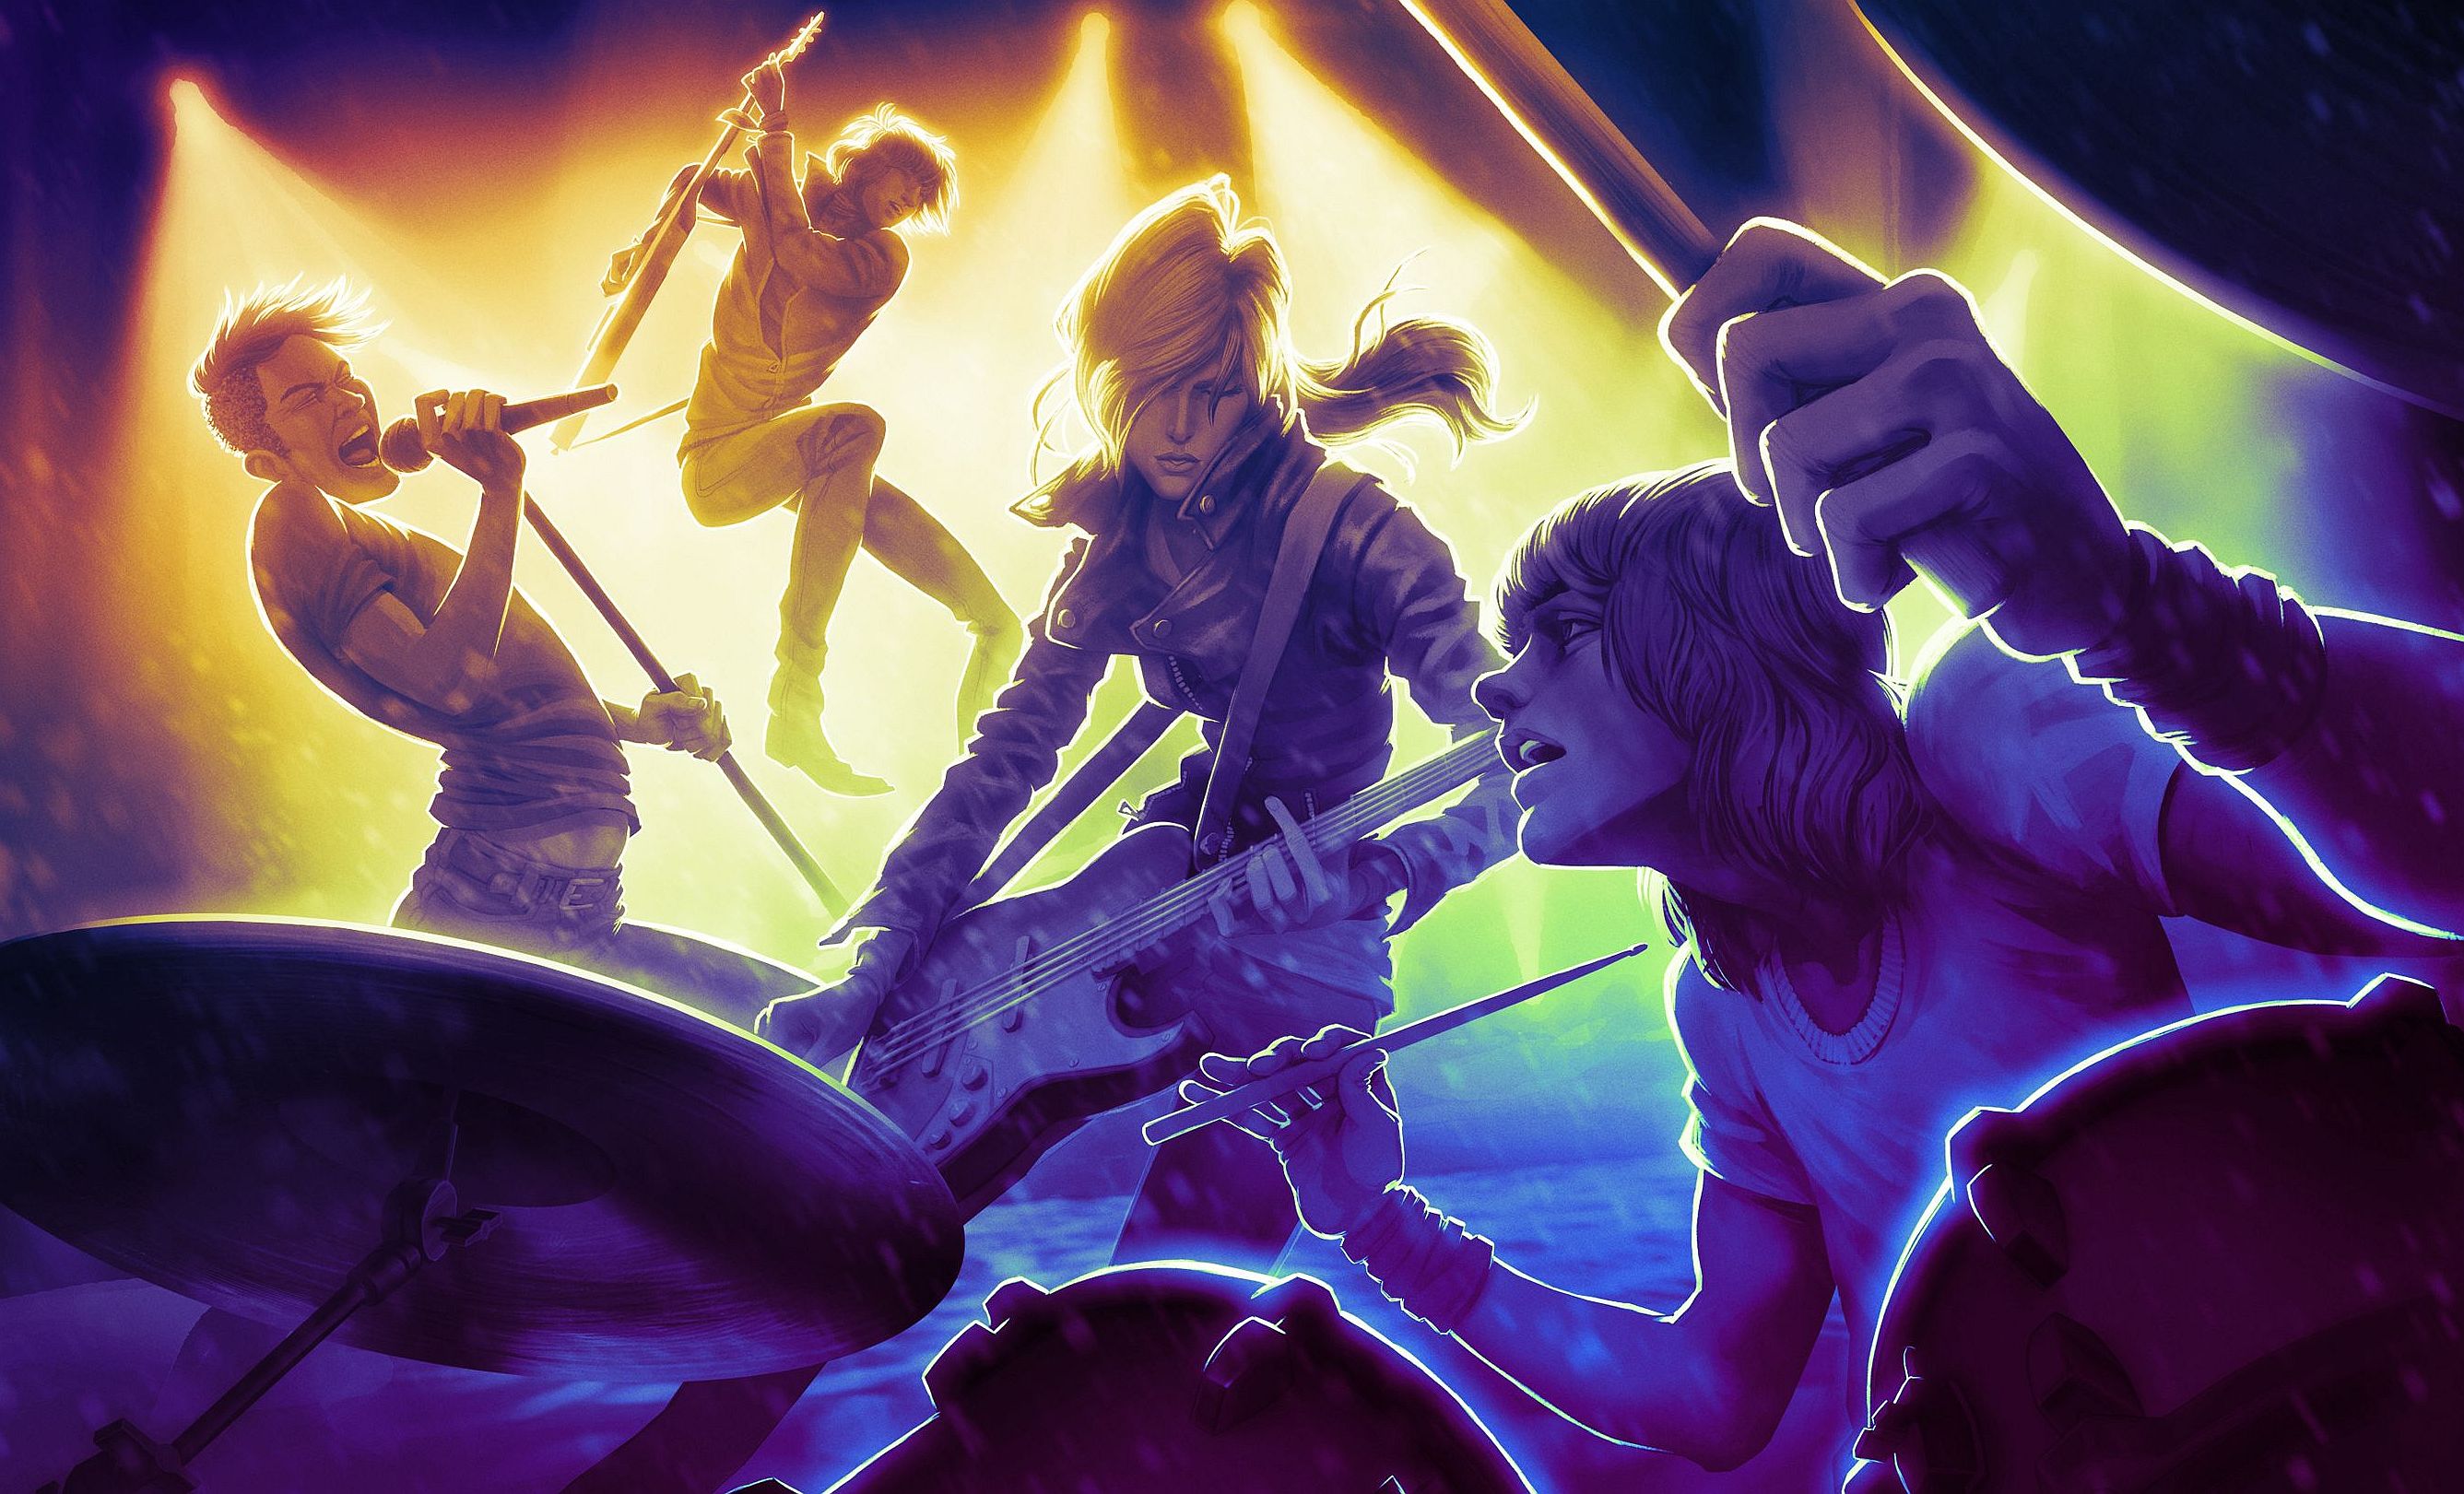 Image for Epic Games acquires Rock Band studio Harmonix